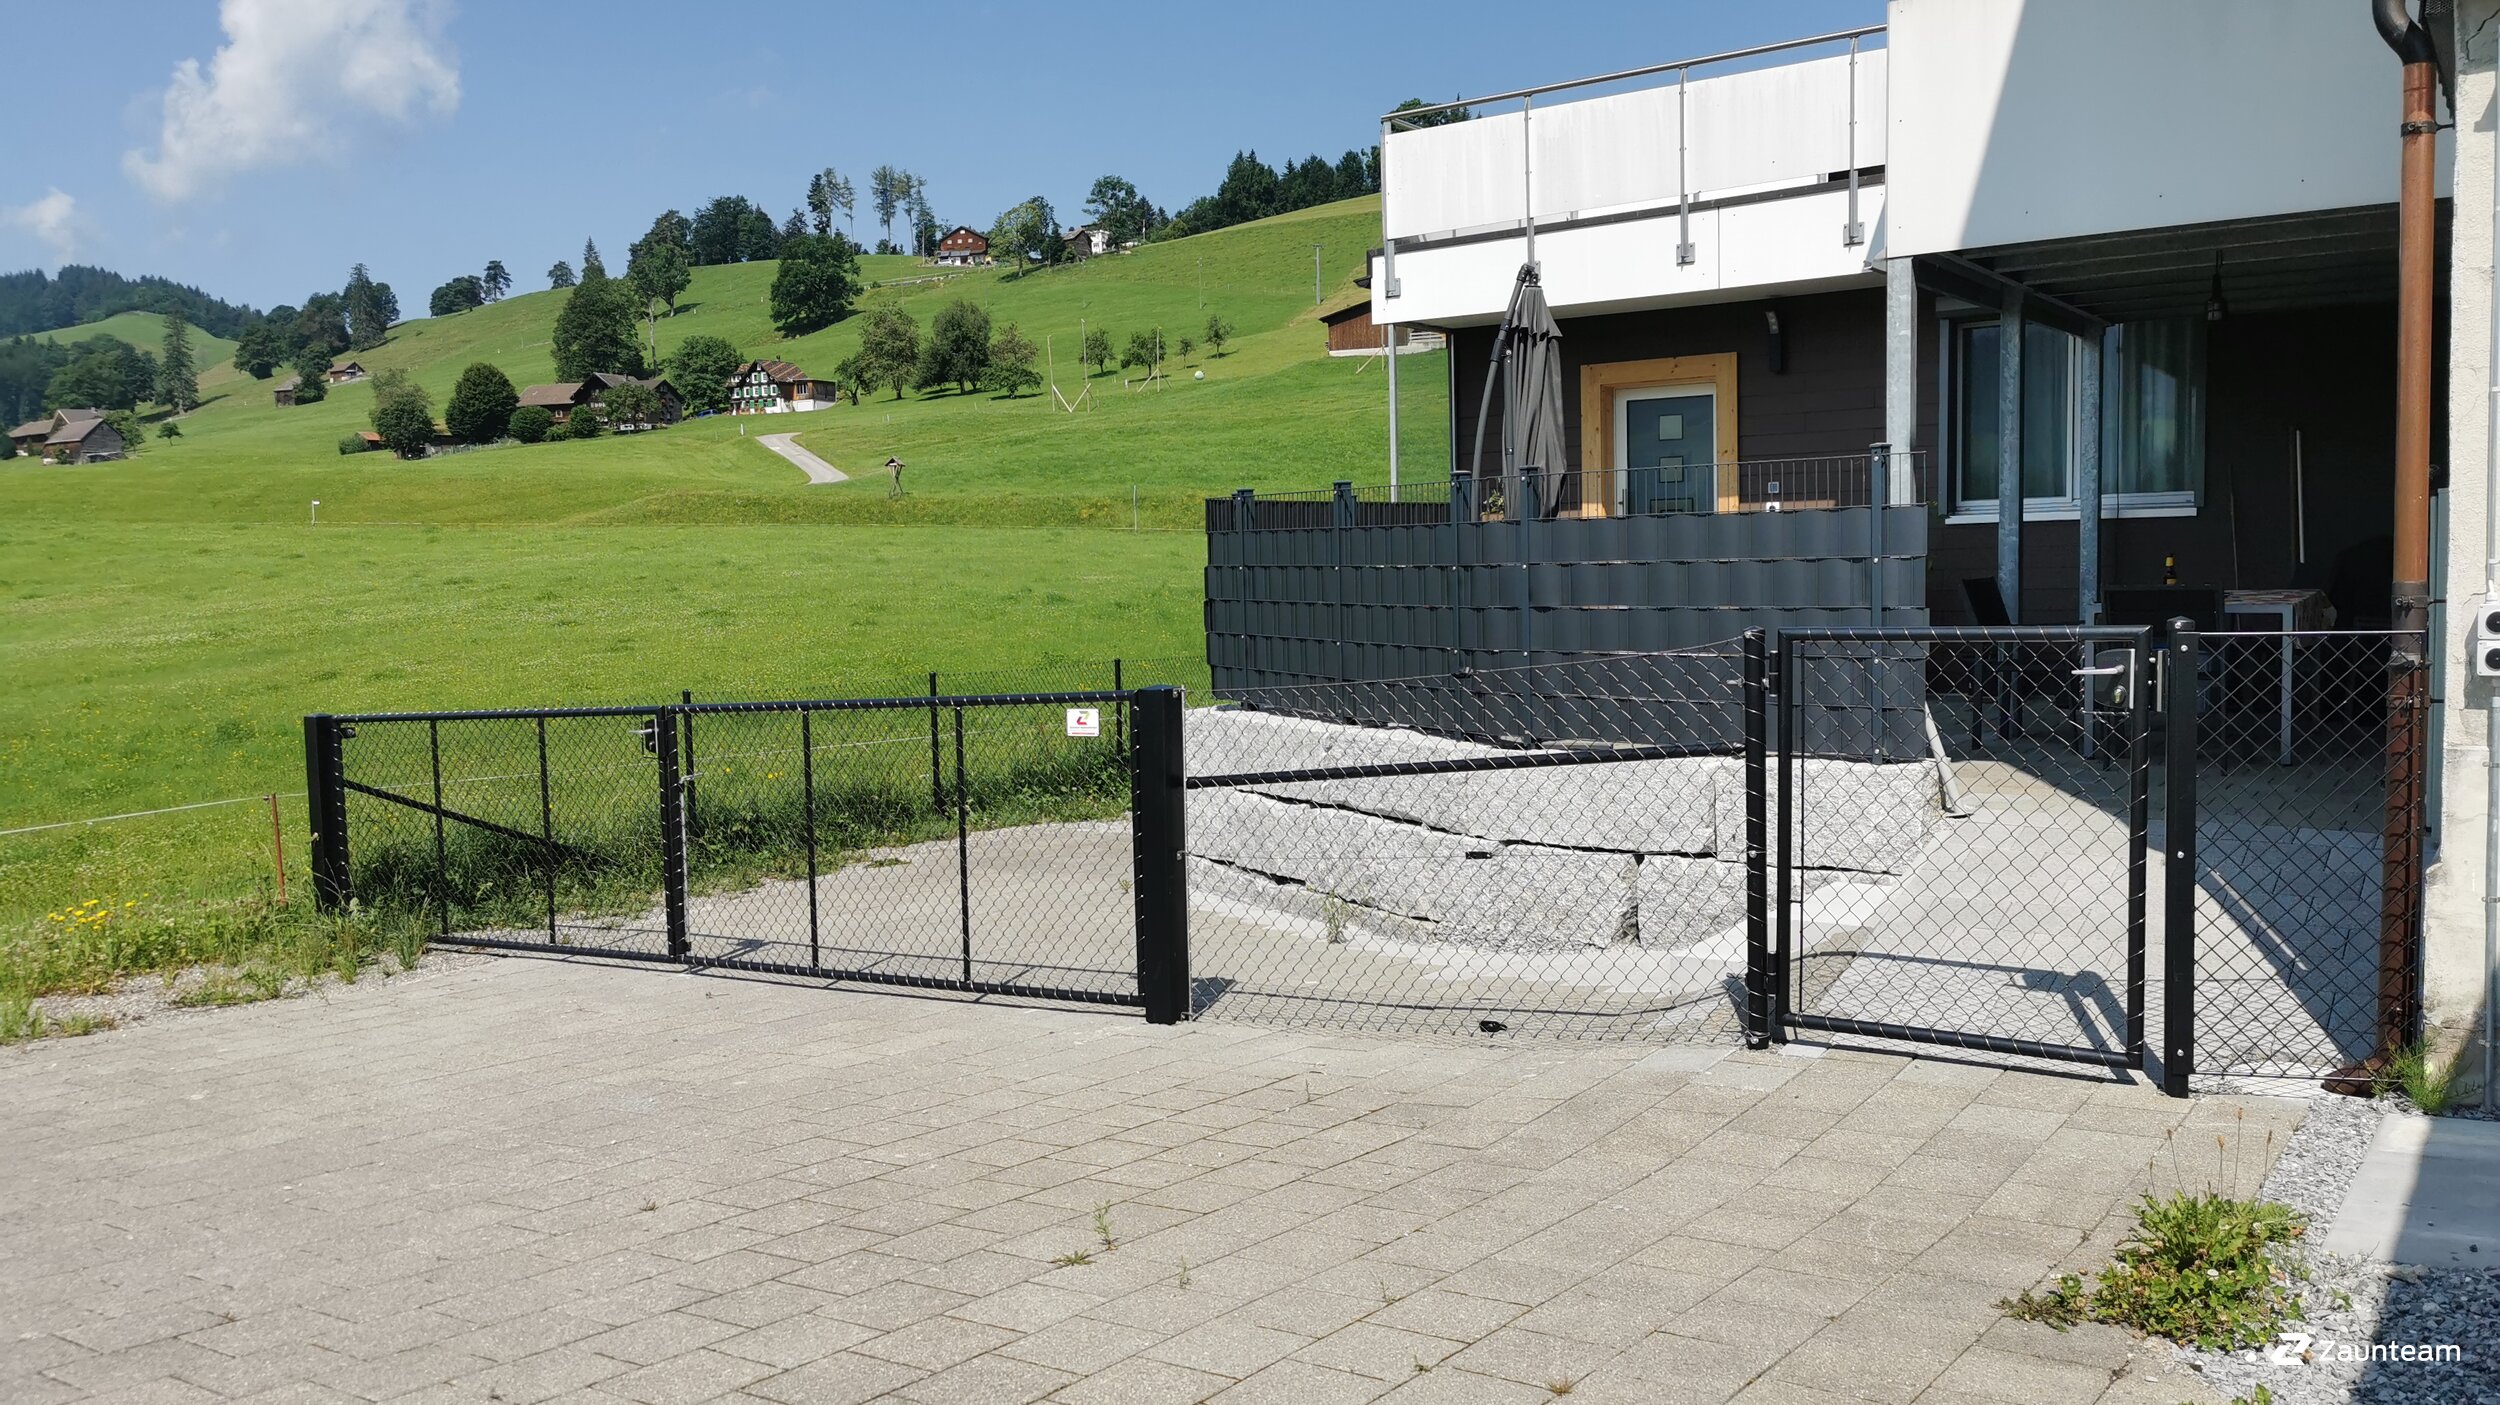 Grillage diagonal de 2021 à 9104 Waldstatt Suisse de Zaunteam Appenzellerland.